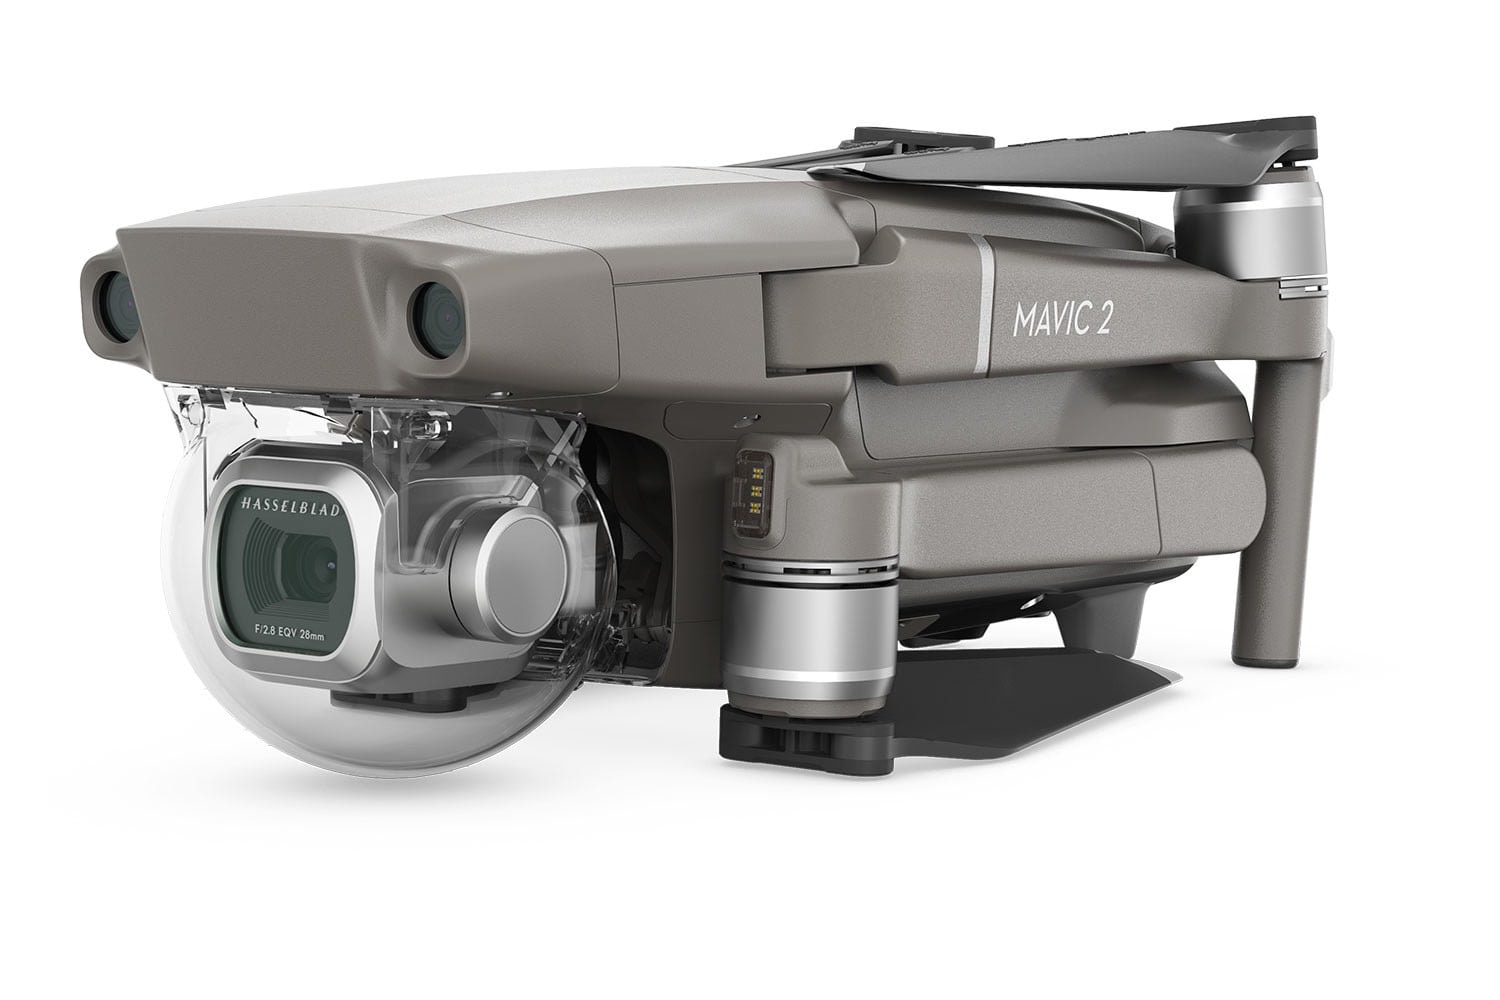 DJI Mavic 2 Pro Hasselblad Drone Imagery L1D-20c 4K HDR Video